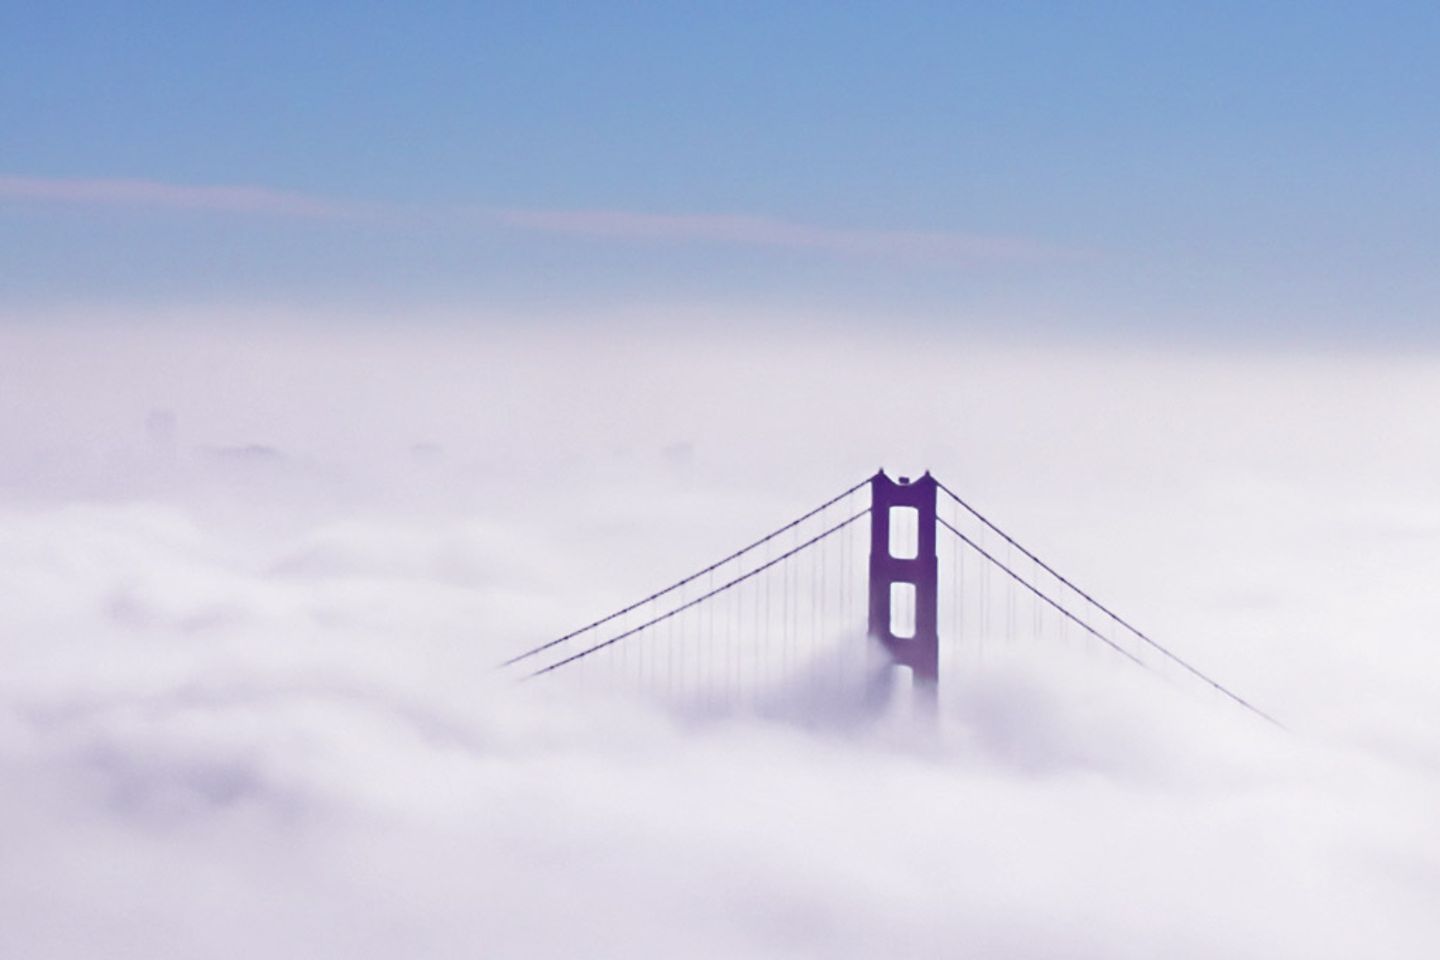 Golden gate bridge rises from a cloud cover